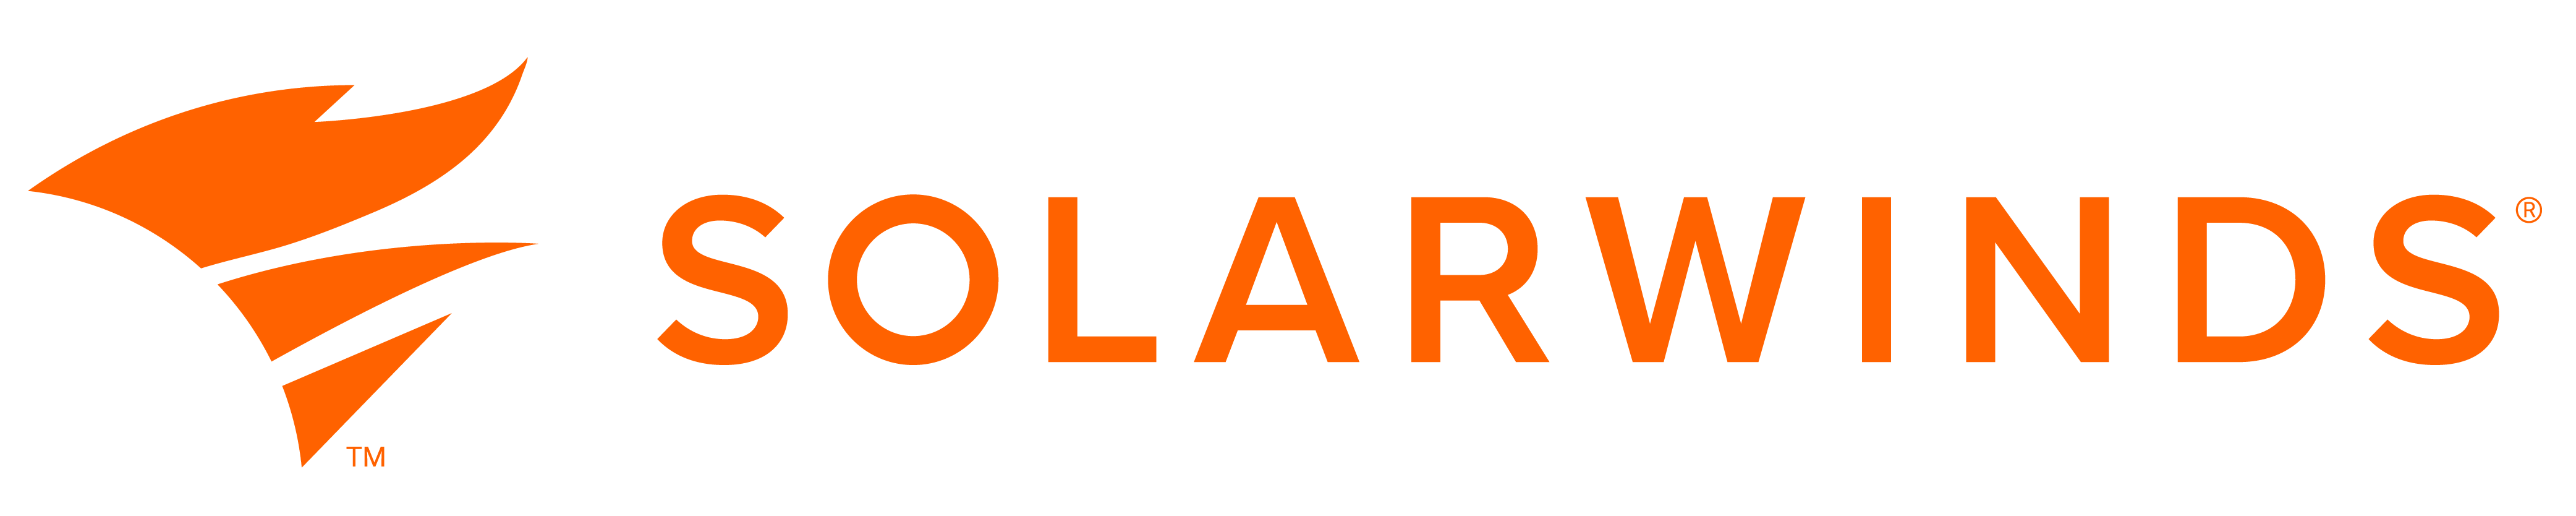 solarwinds - logo